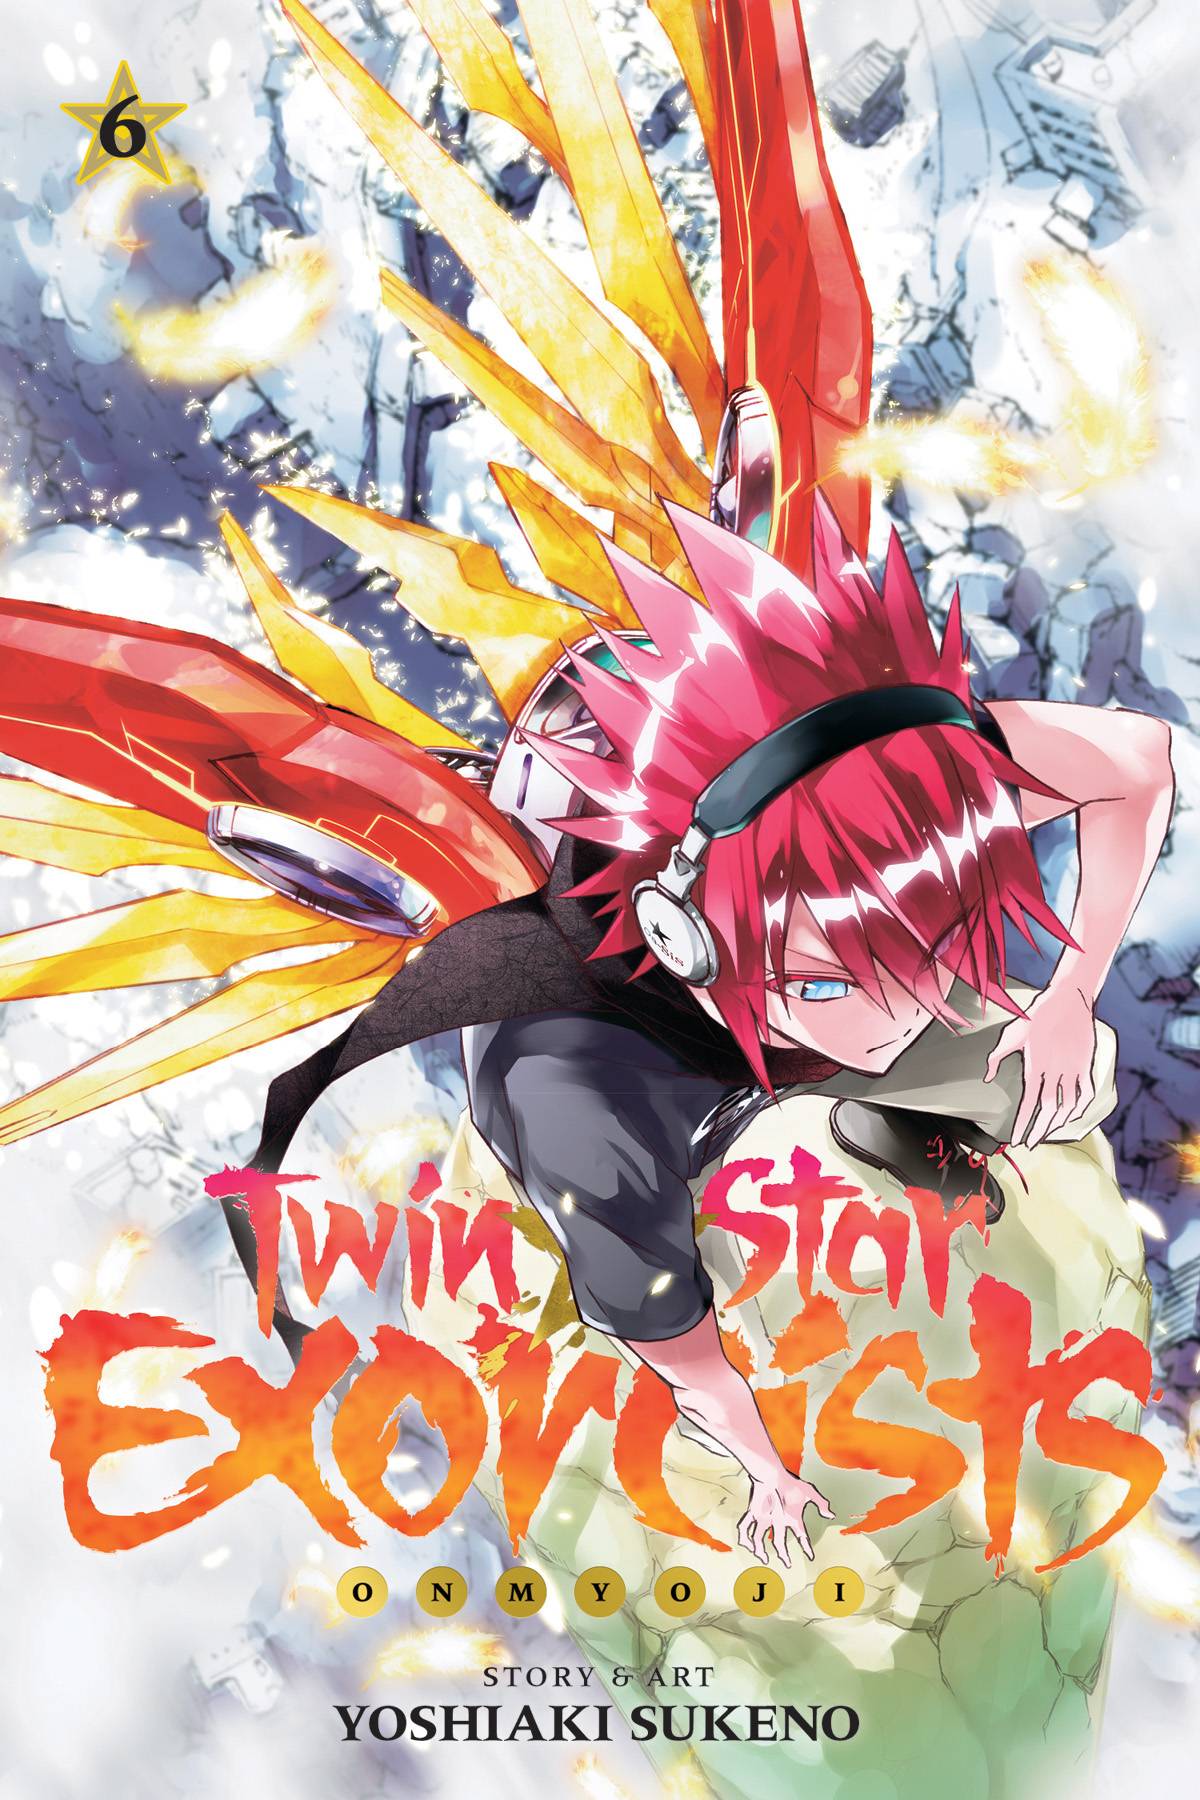 Twin Star Exorcists - Yoshiaki Sukeno